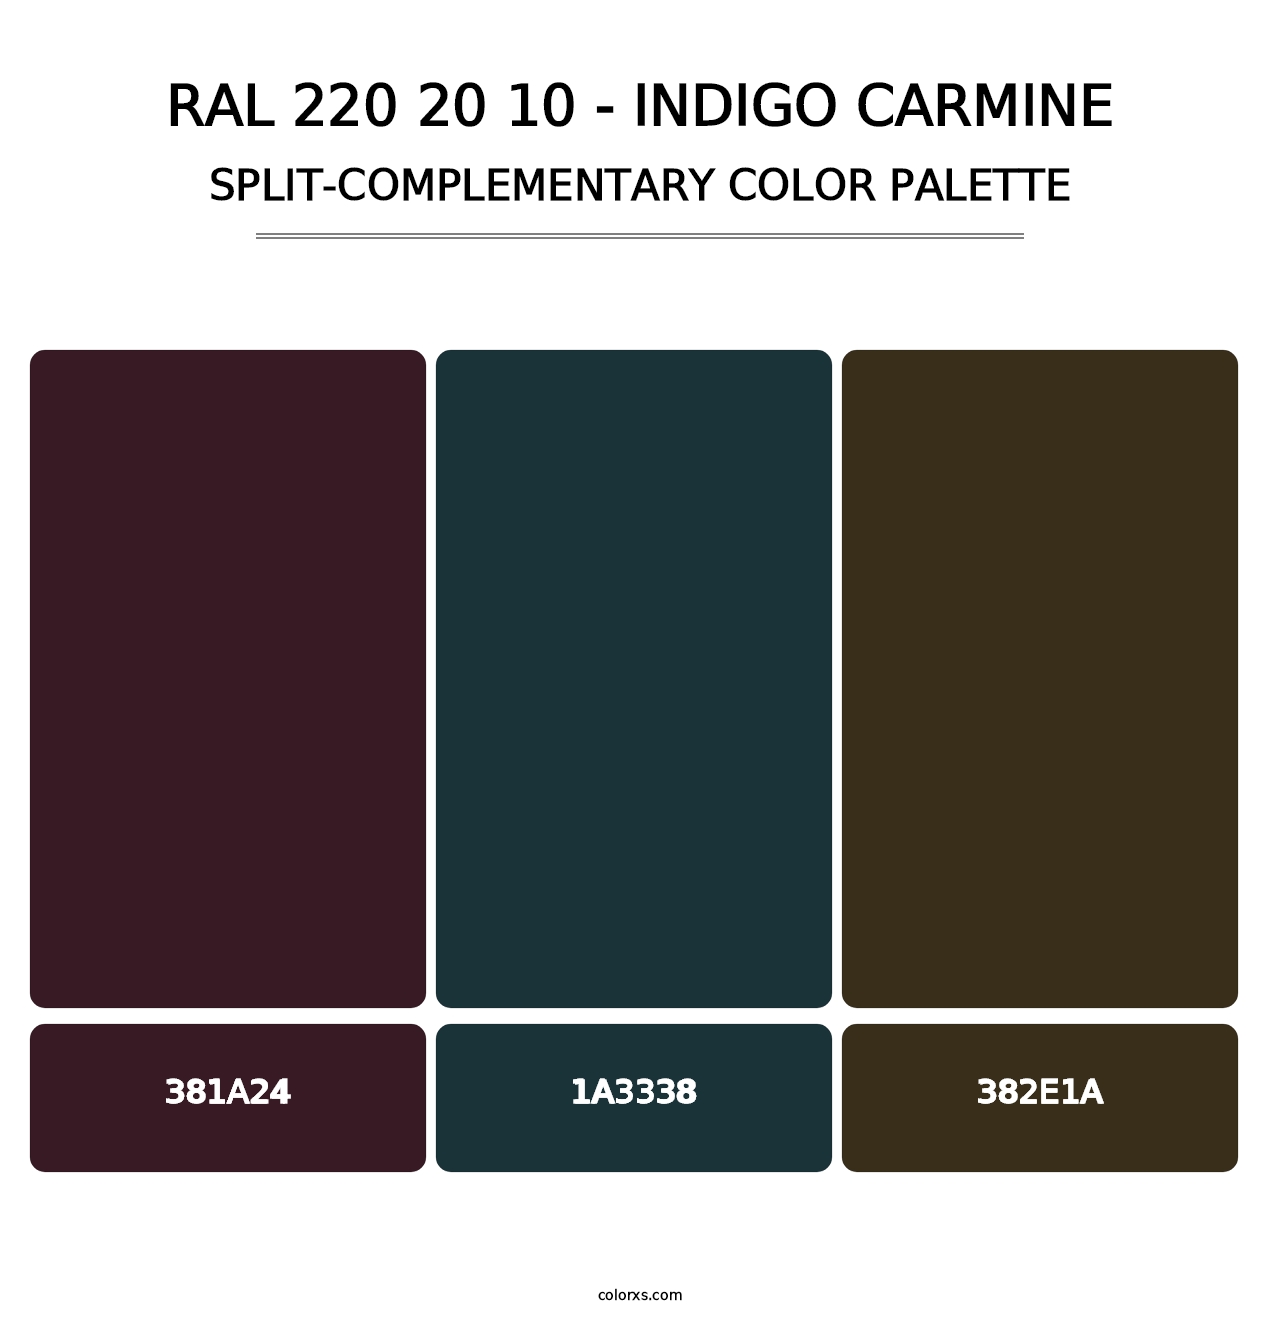 RAL 220 20 10 - Indigo Carmine - Split-Complementary Color Palette